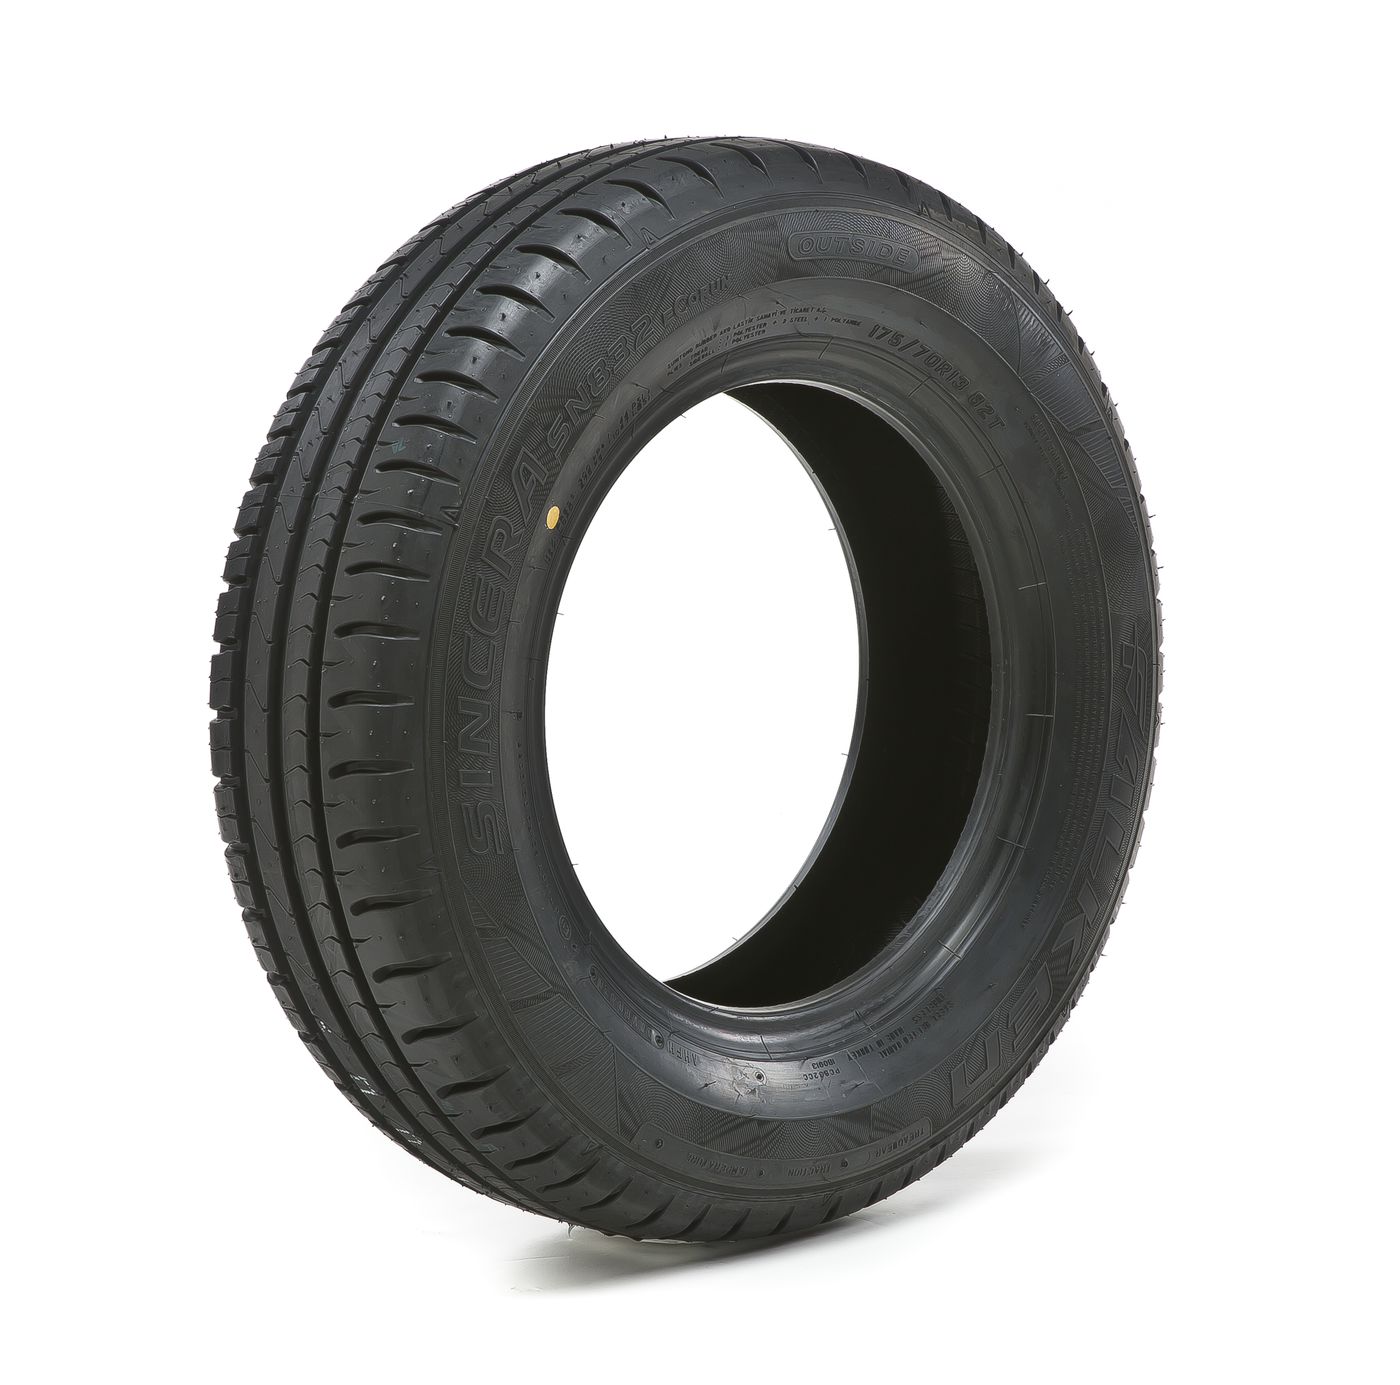 Reifen
Tyre
Pneu
Band
Neumático
Pneumatici
Pneu